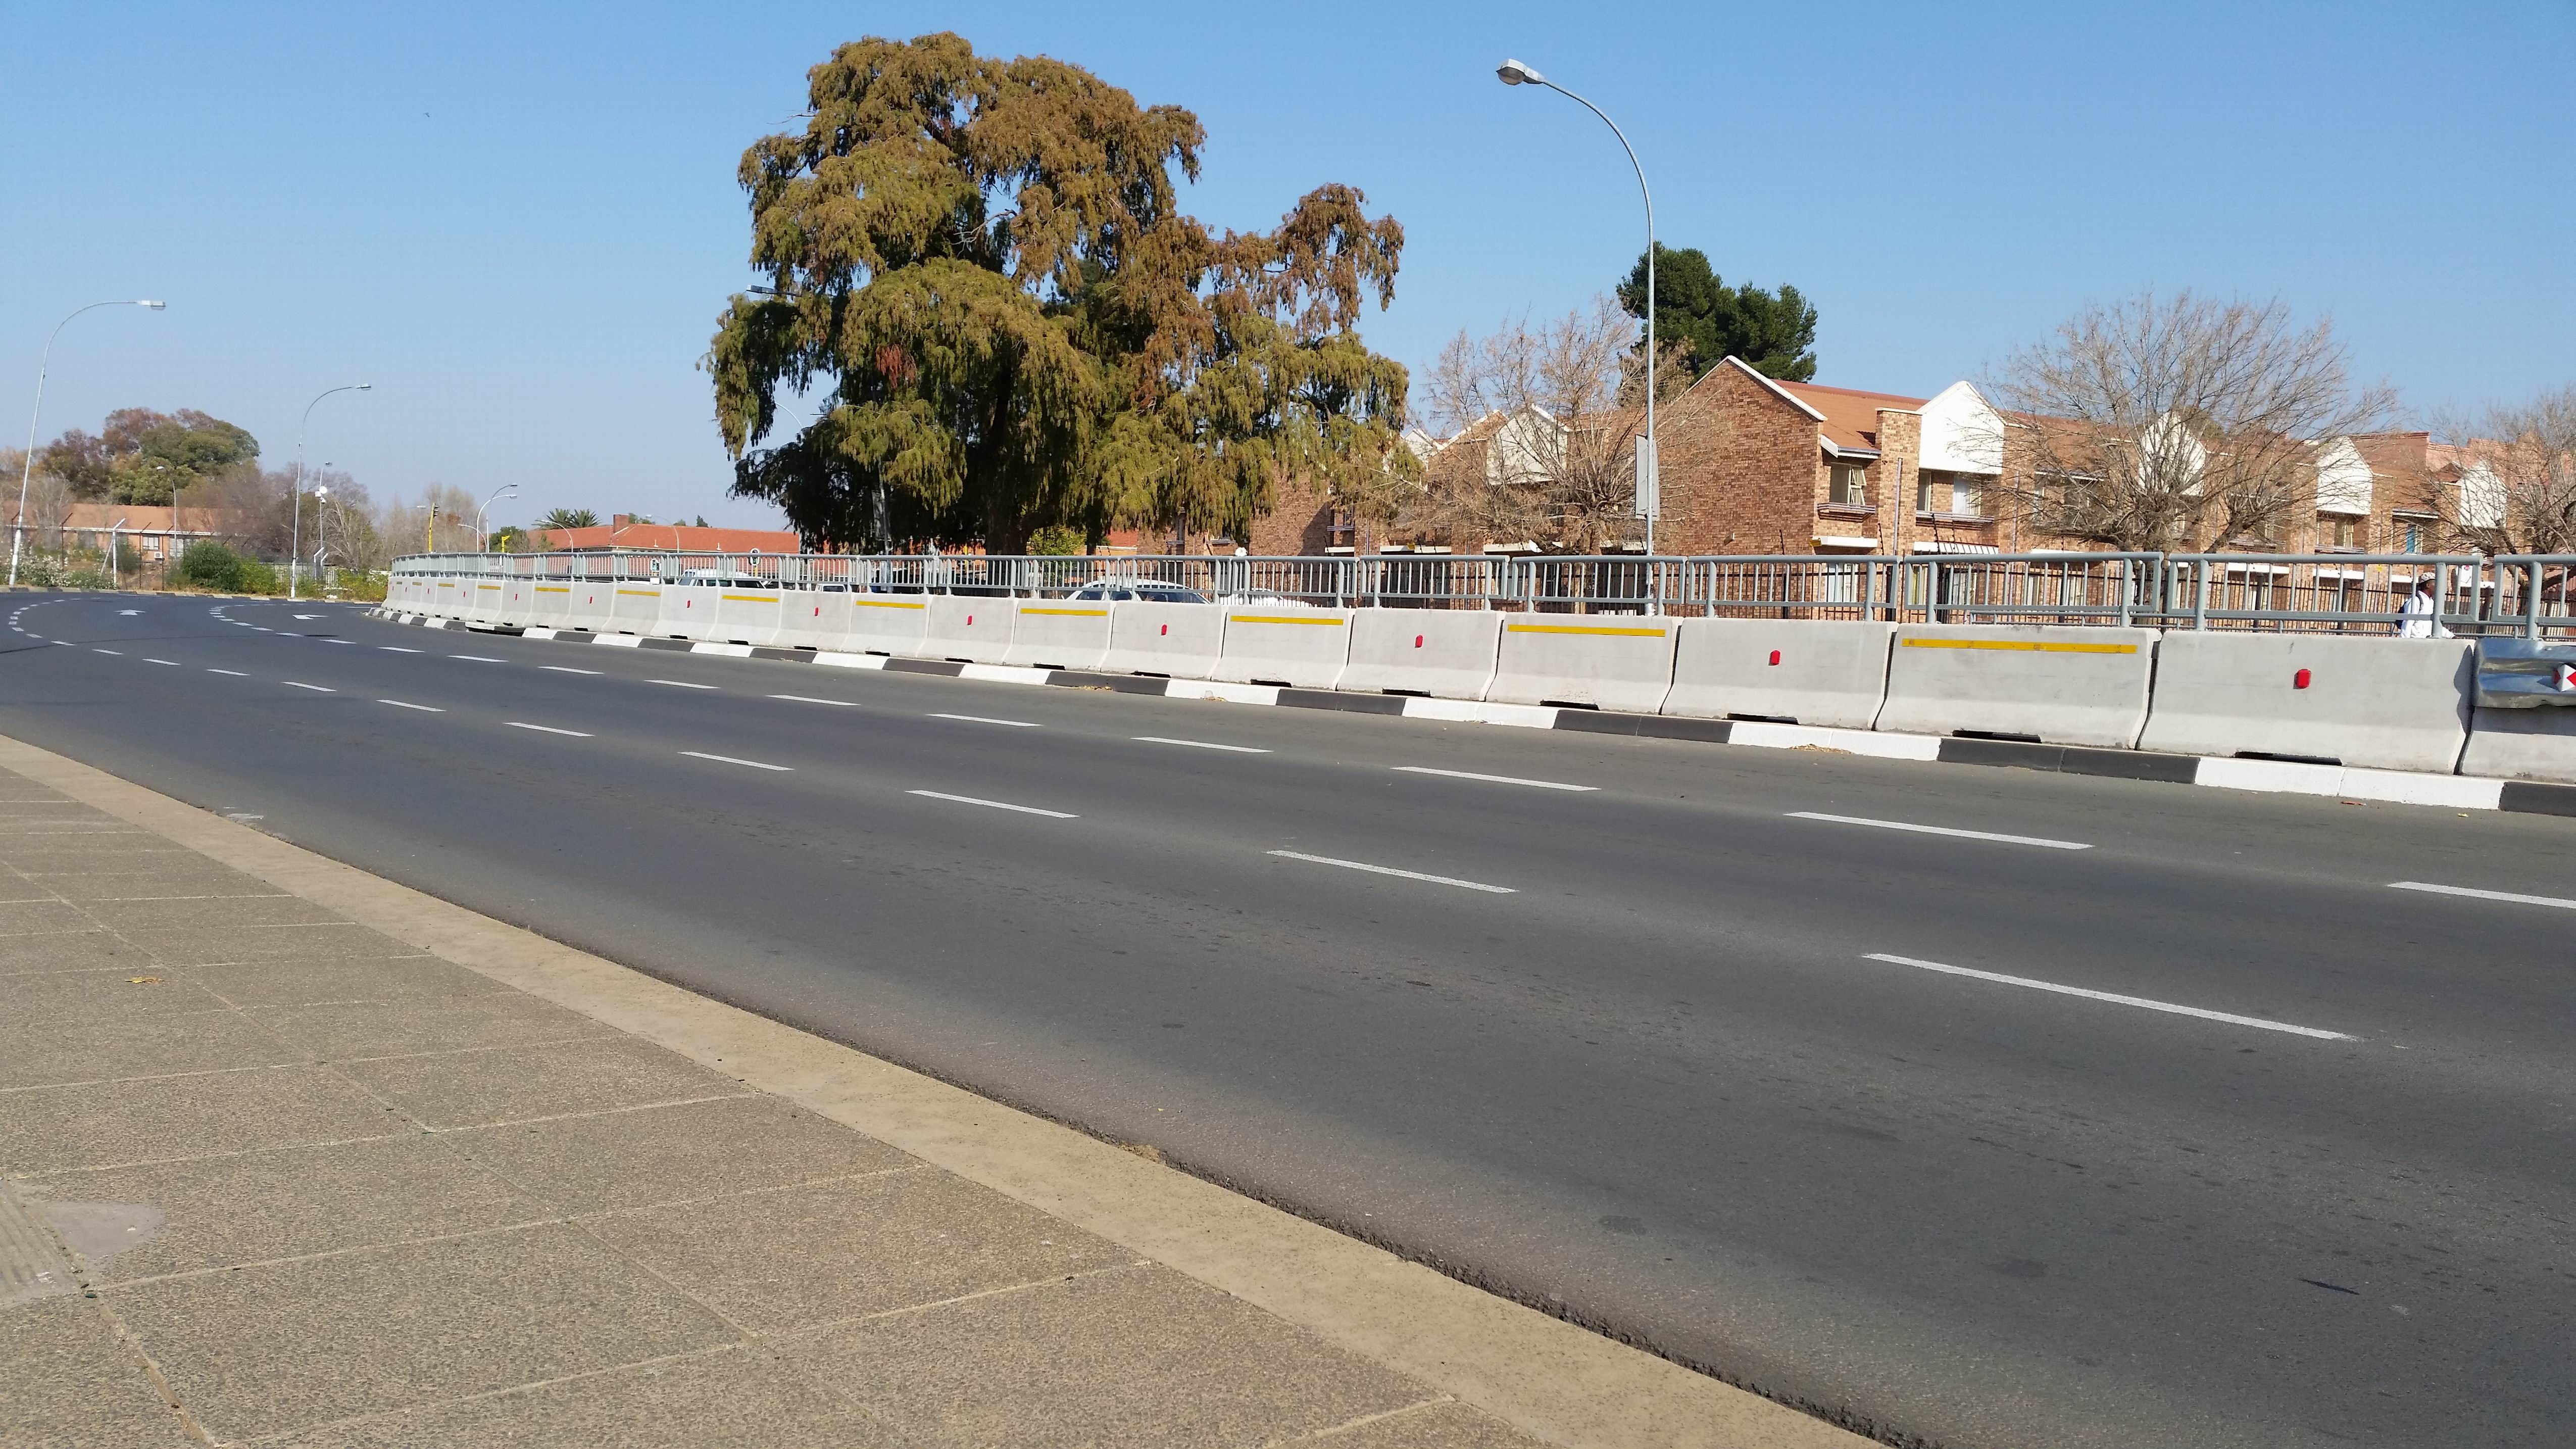 REBLOC road barriers enhance road safety